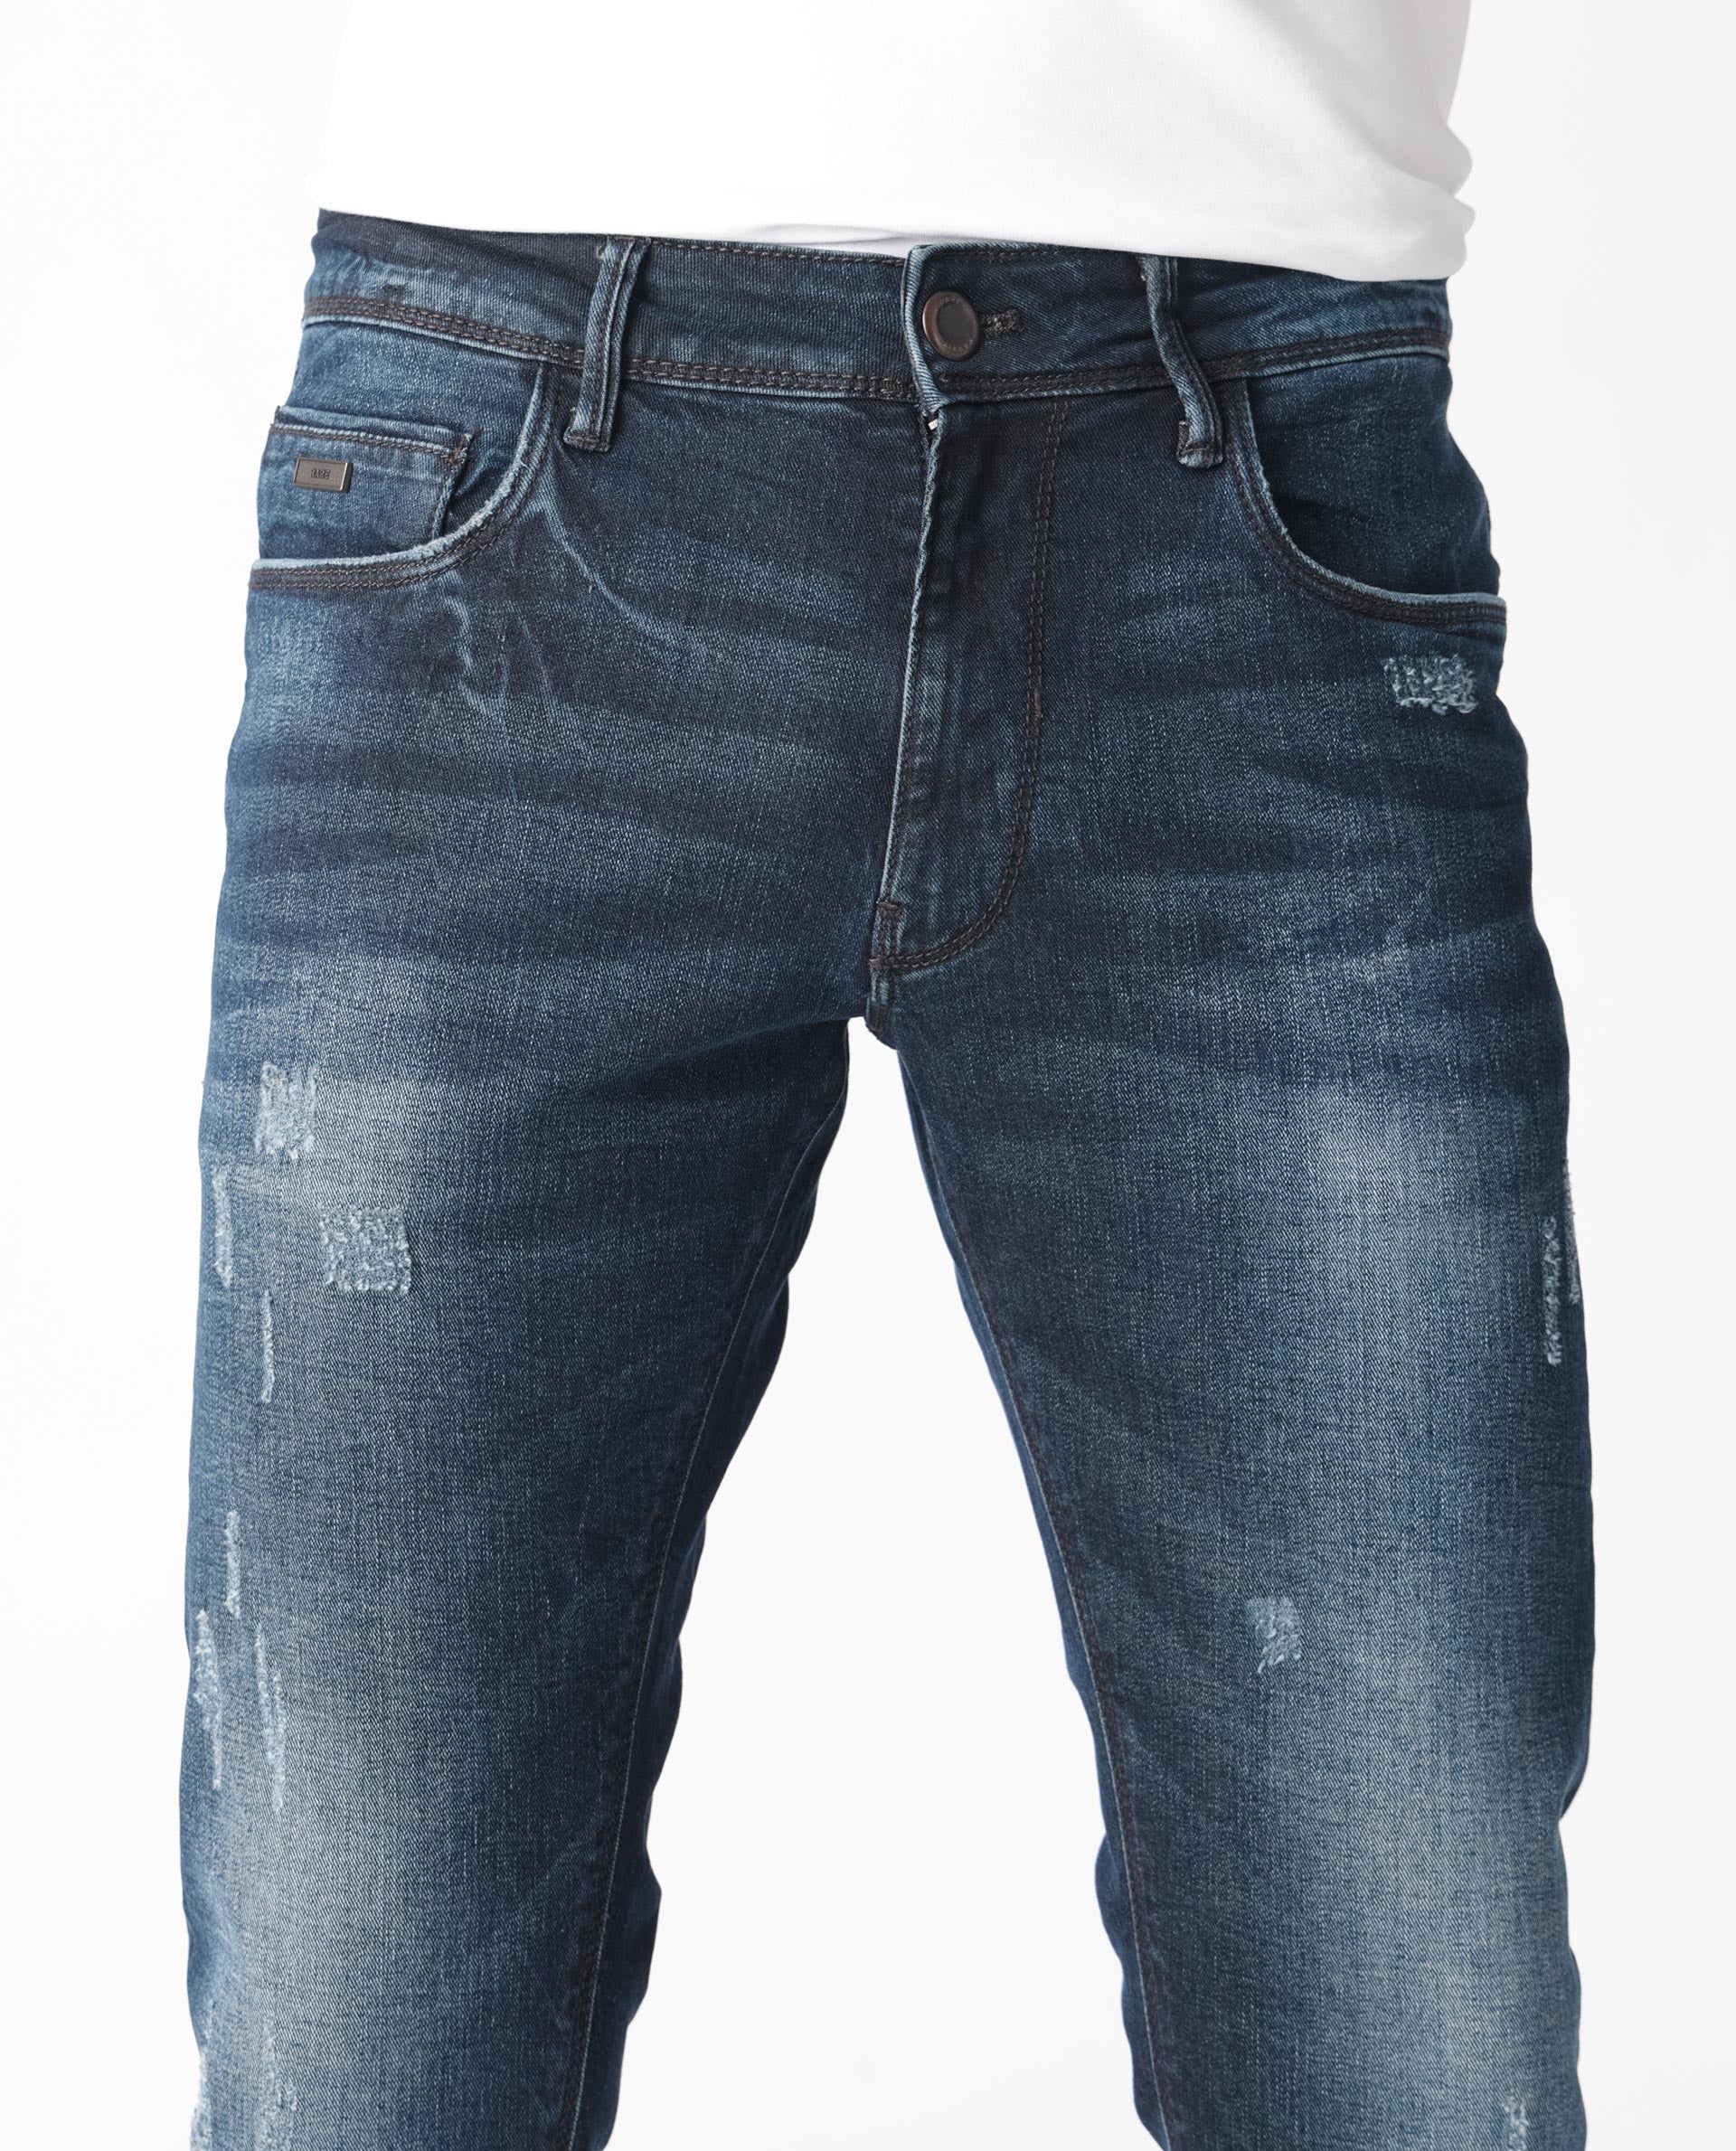 Rare Rabbit Men's Gaule Blue Mid-Rise Mid-Wash Regular Fit Jeans